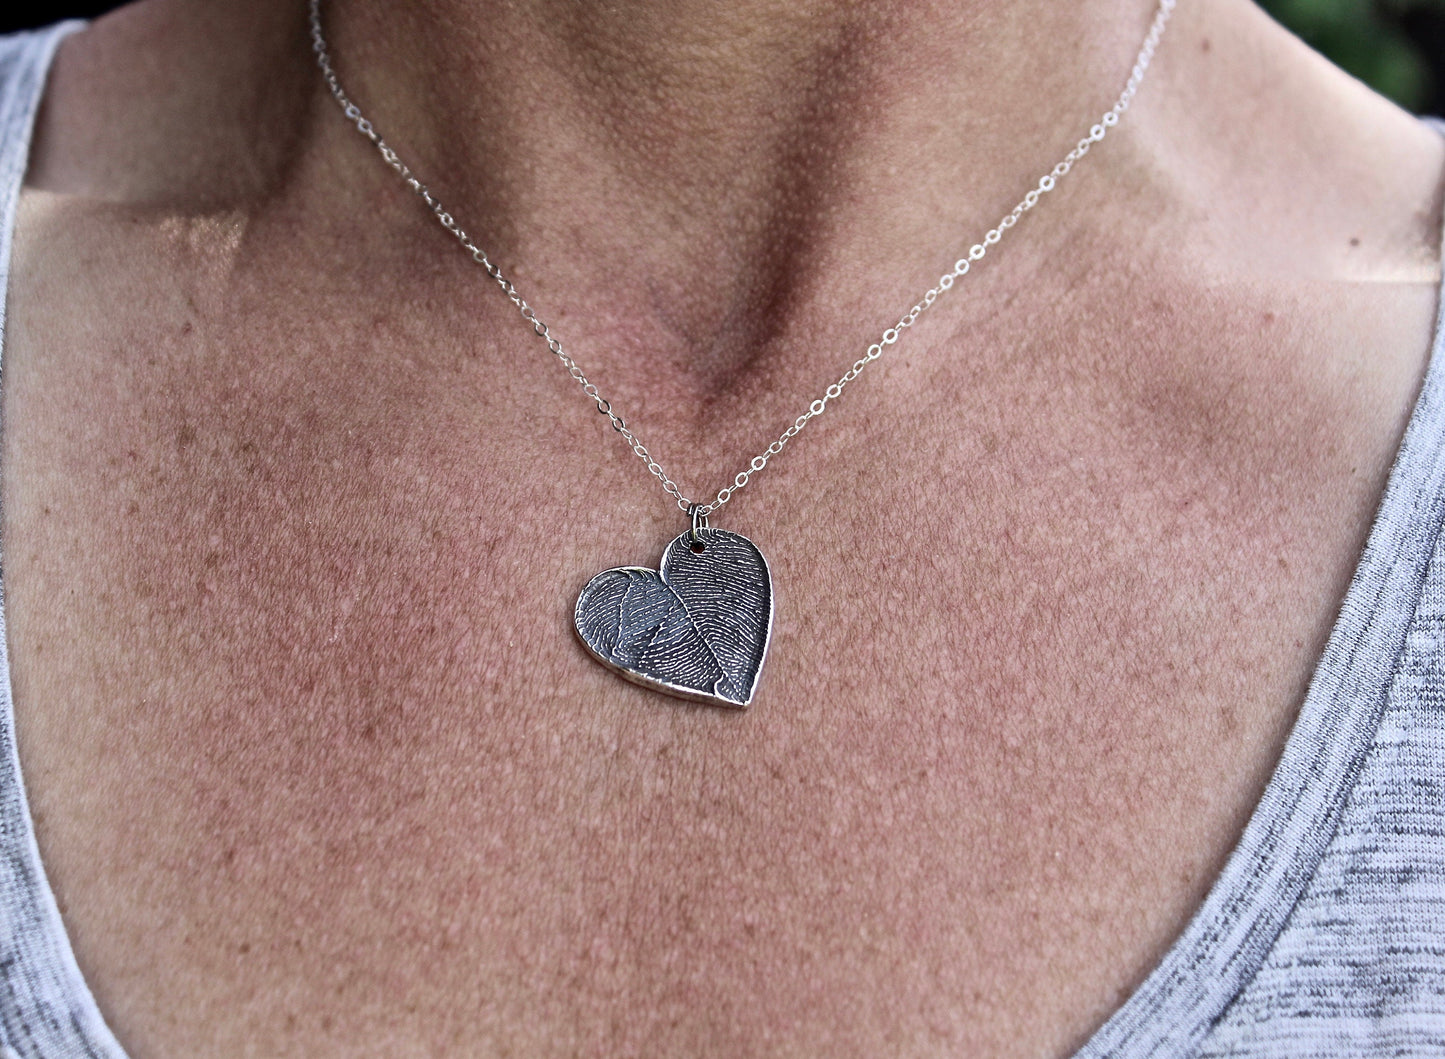 Two Fingerprints form a Heart Sterling Silver Necklace